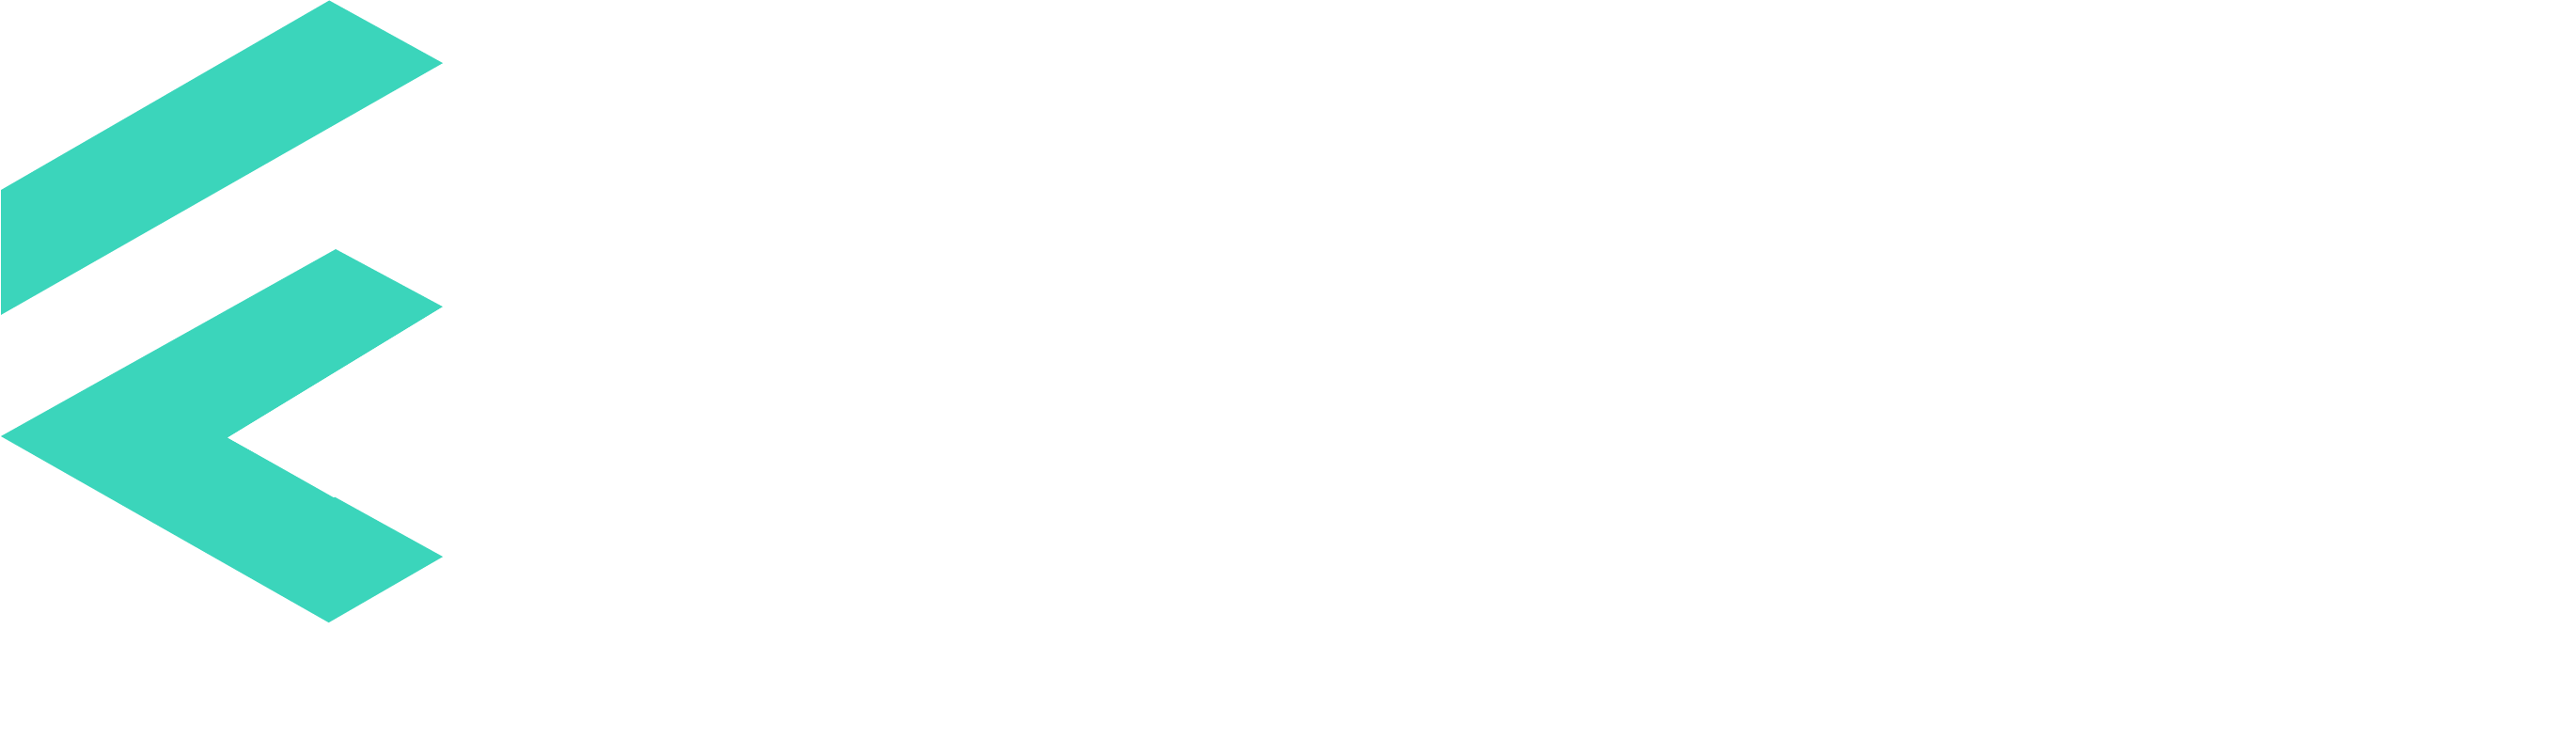 FigBytes_White_logo